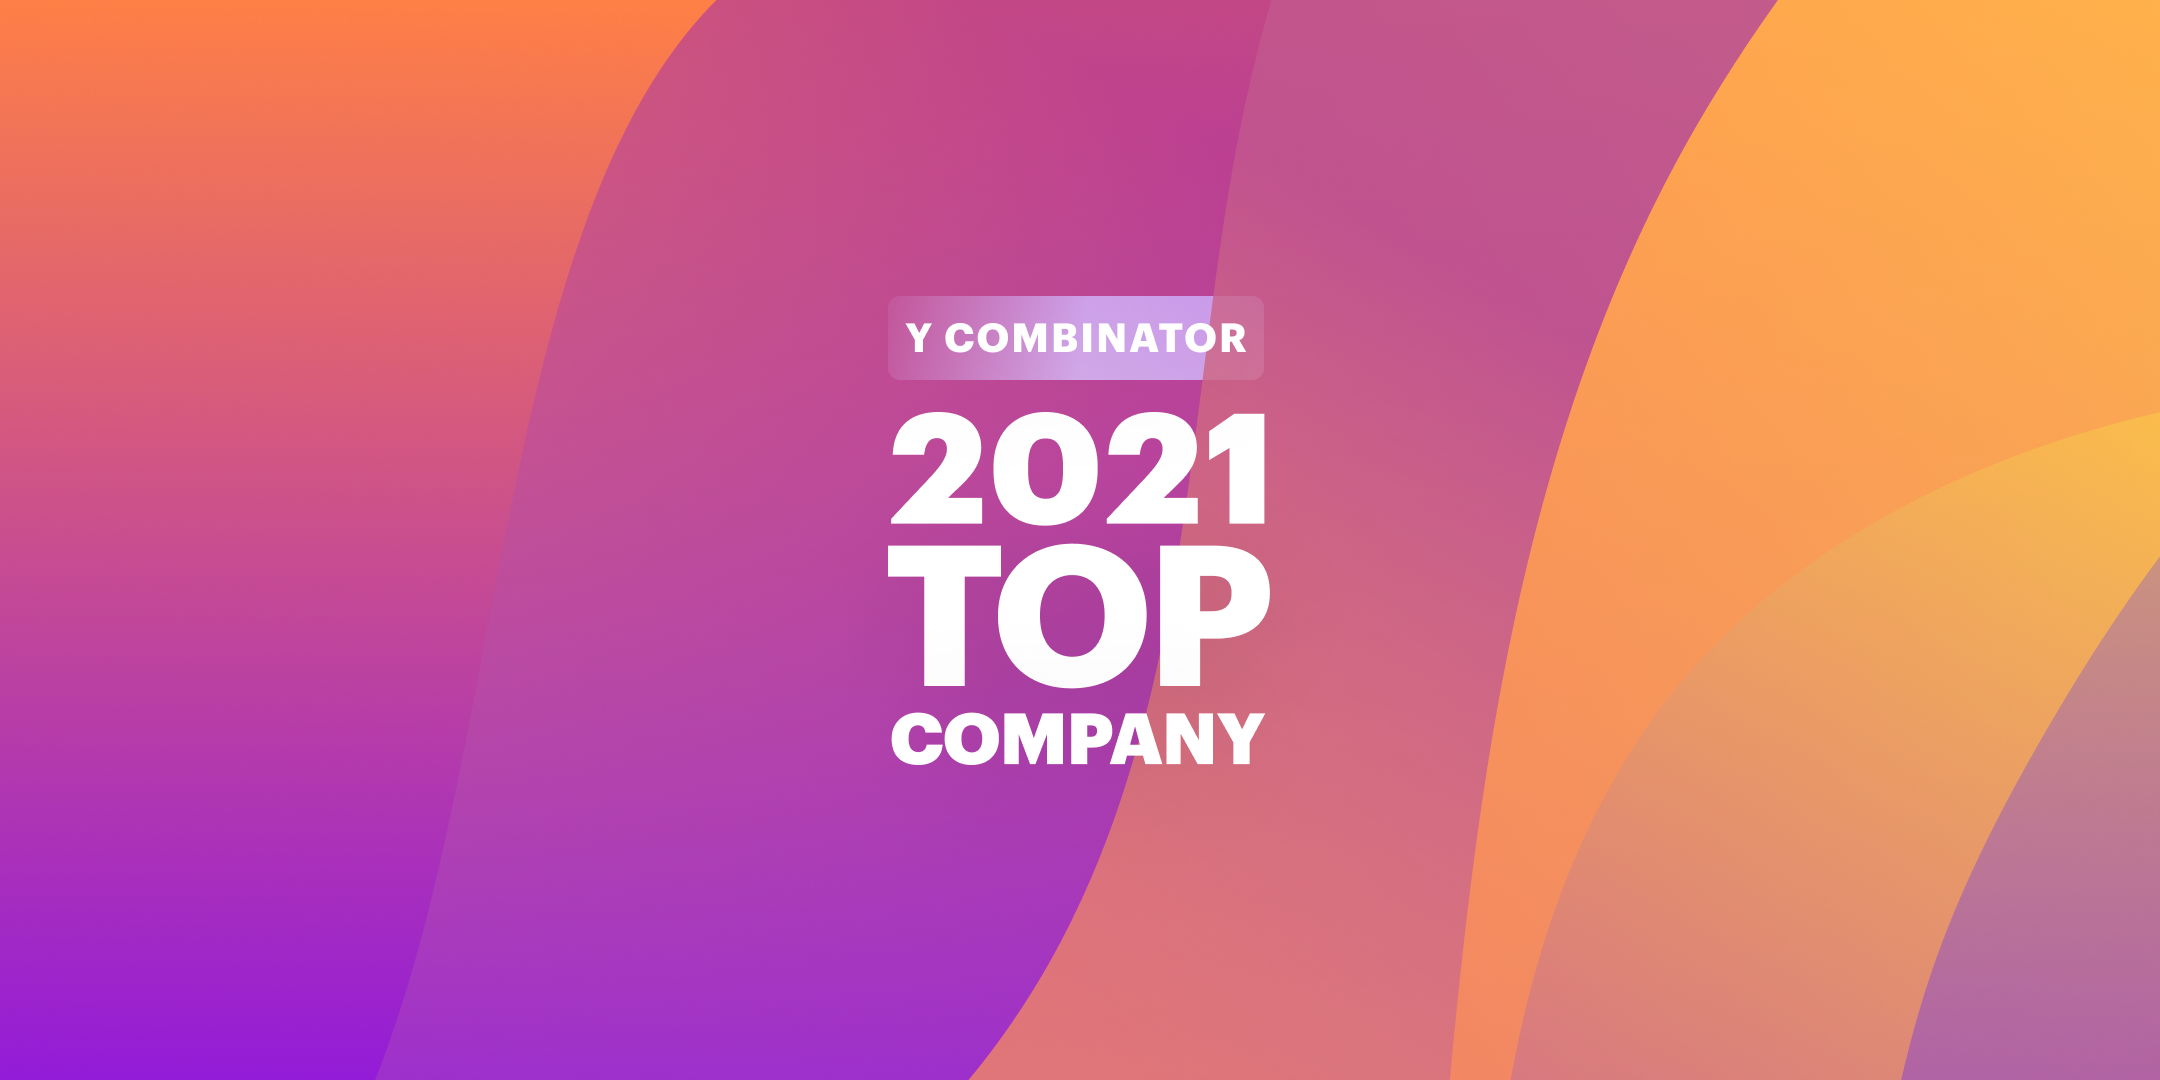 Gem Makes Y Combinator’s List of Top Companies